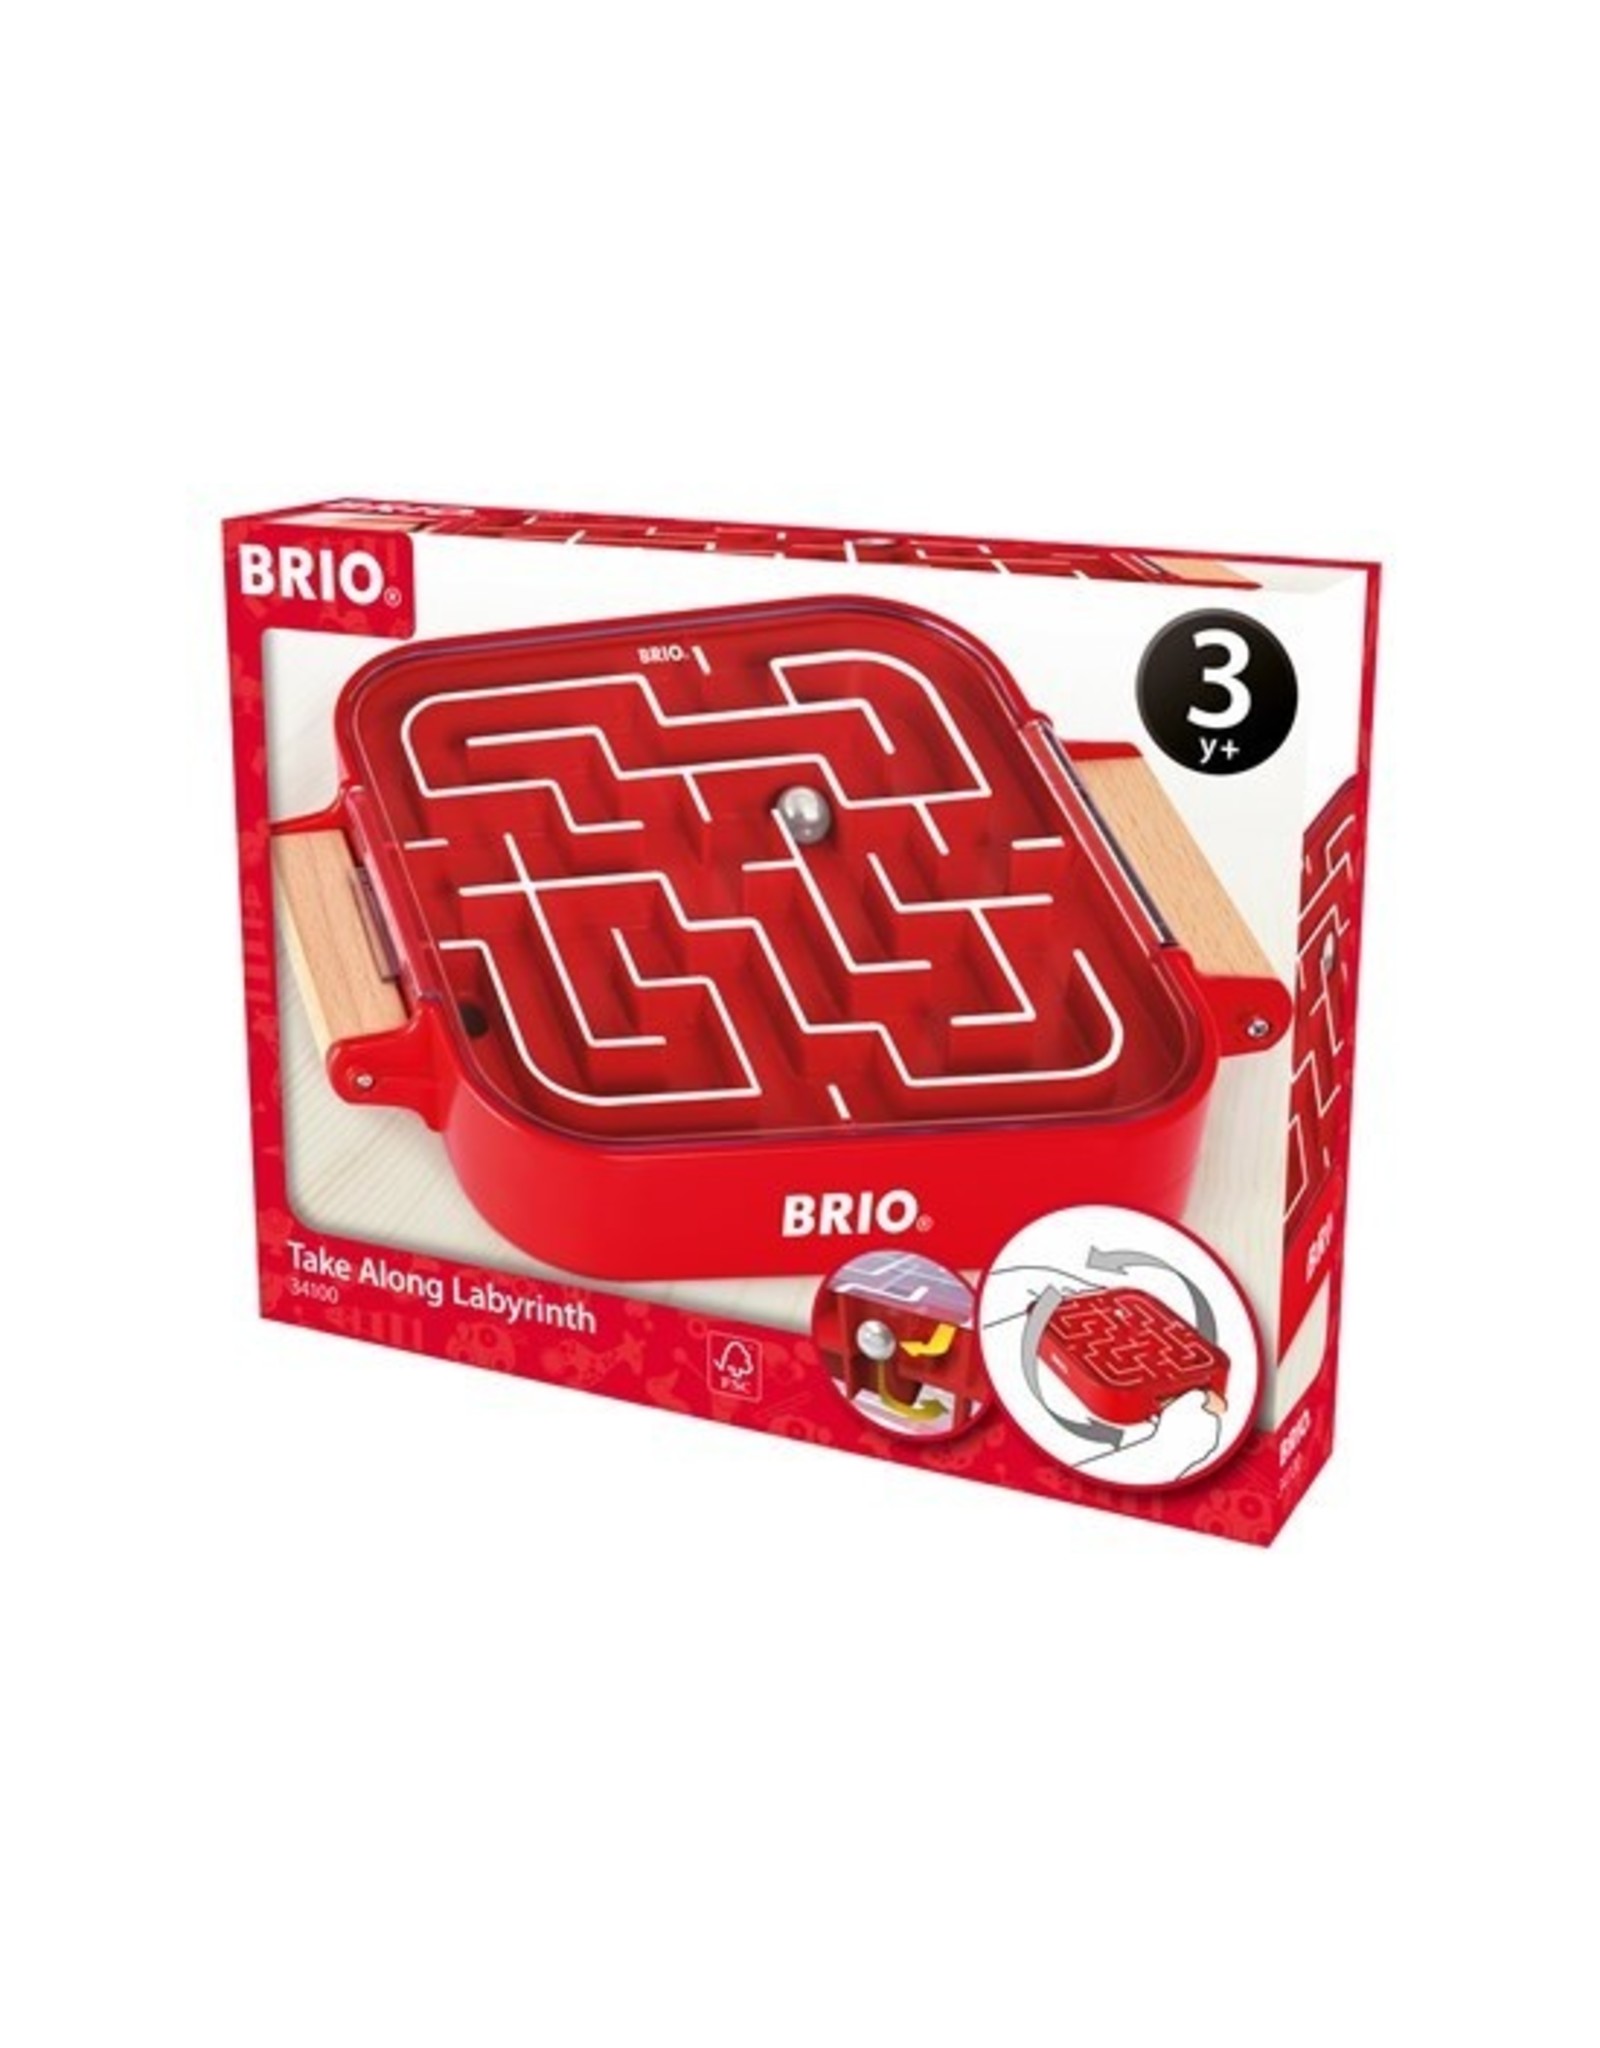 Brio BRIO Take Along Labyrinth